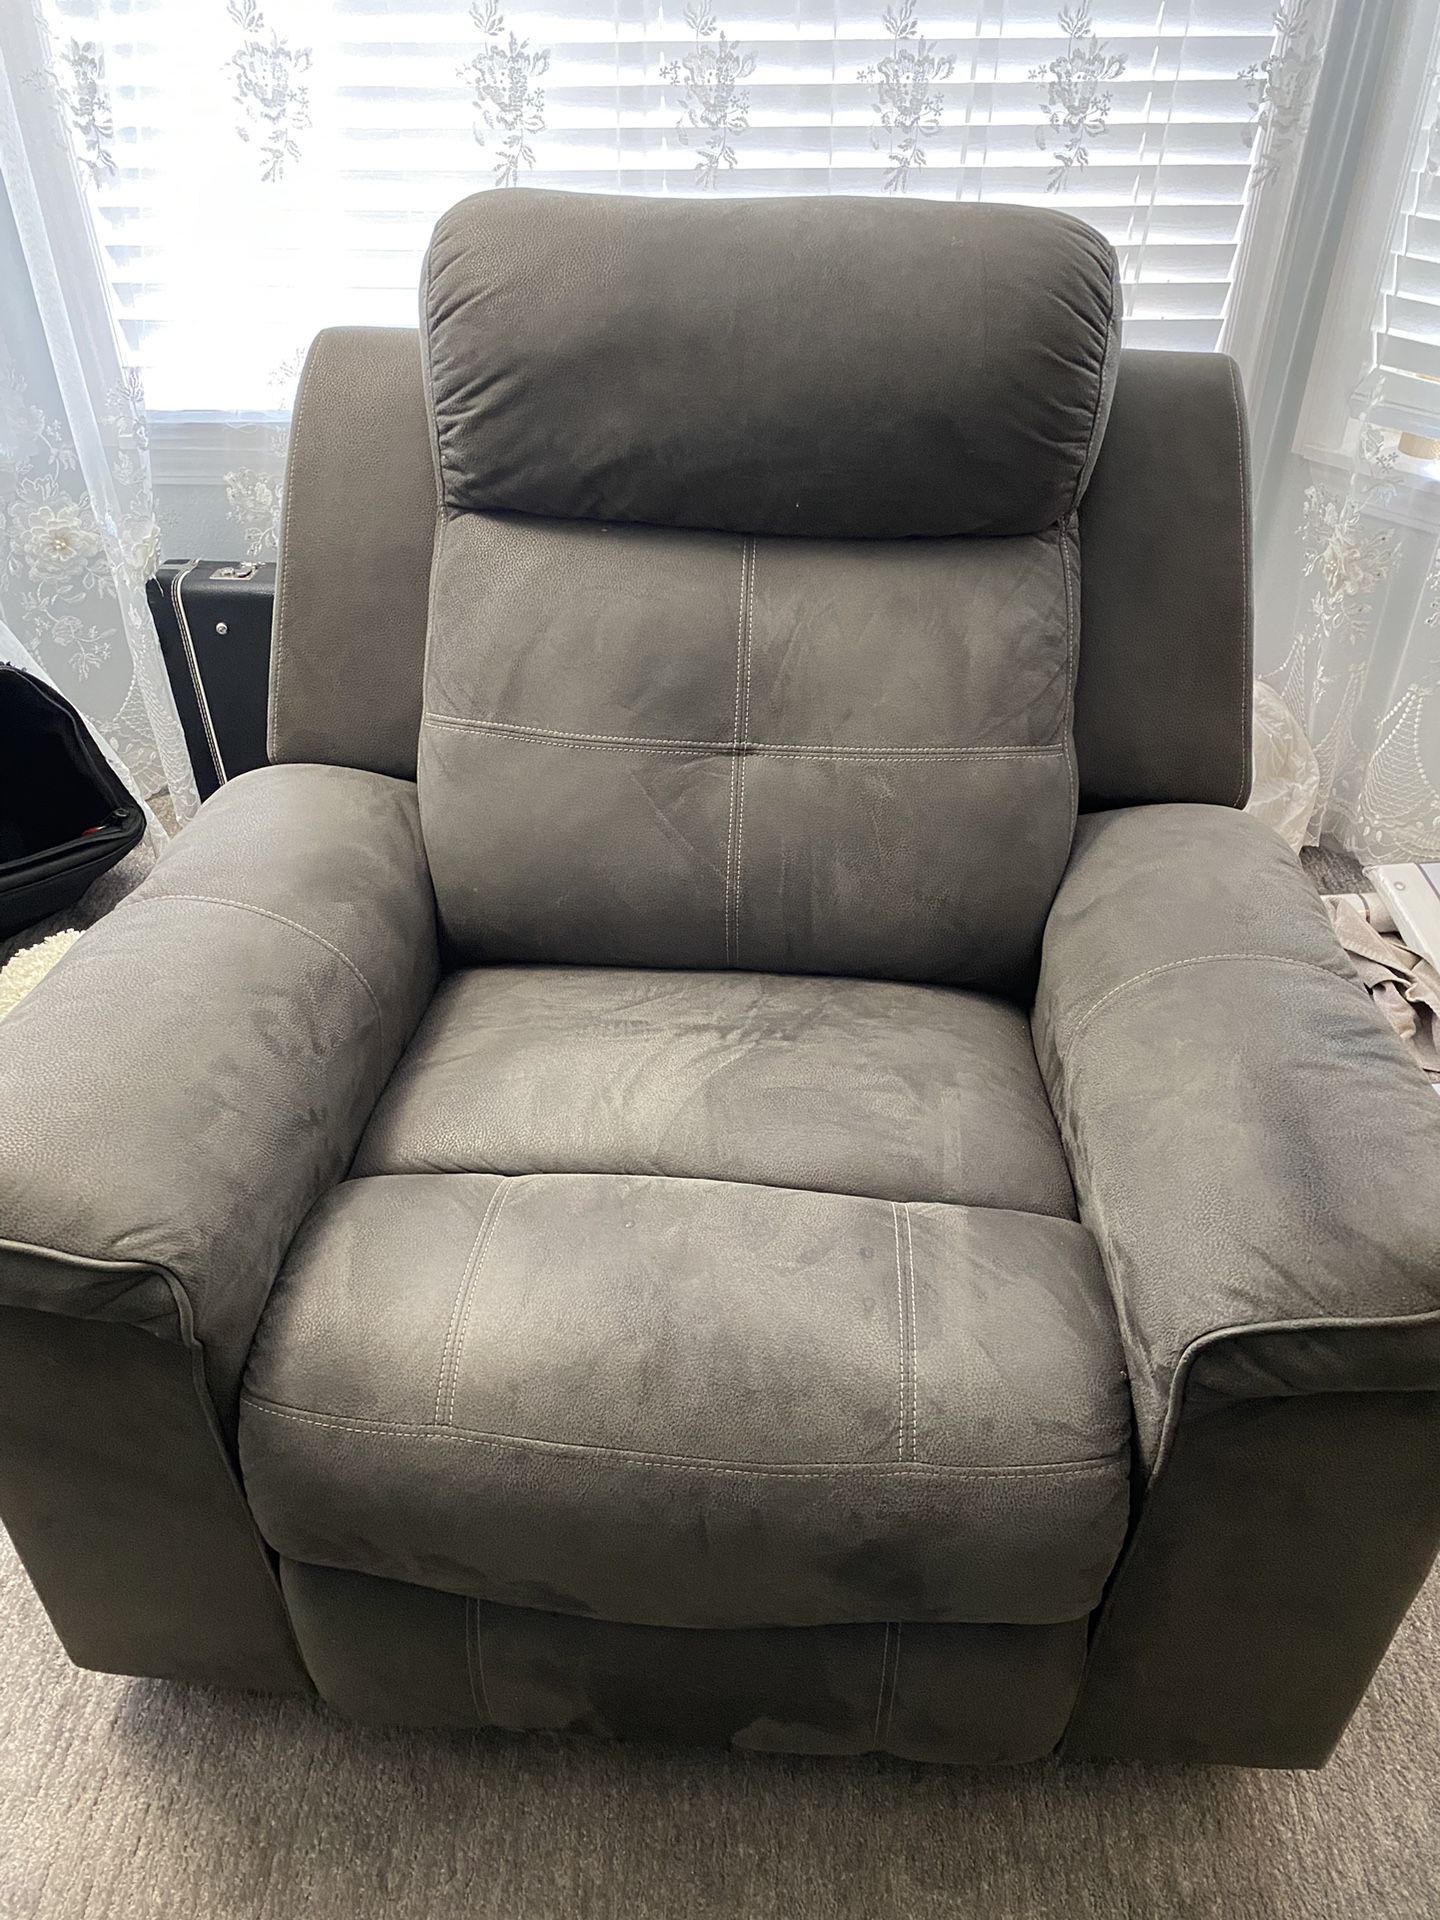 Grey Rocking Recliner Chair